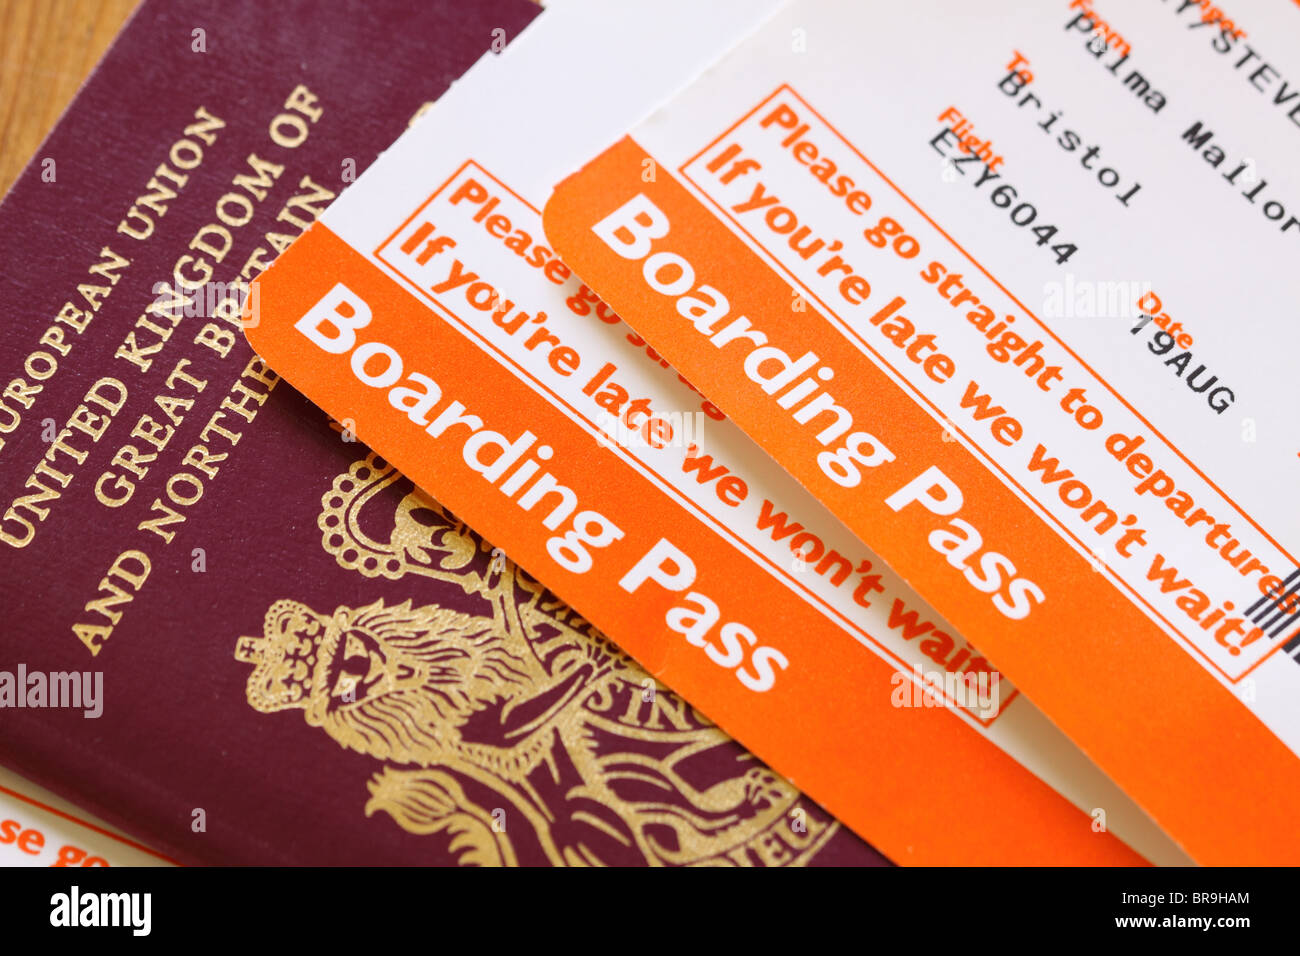 Easyjet airline flight boarding pass and UK passport Stock Photo